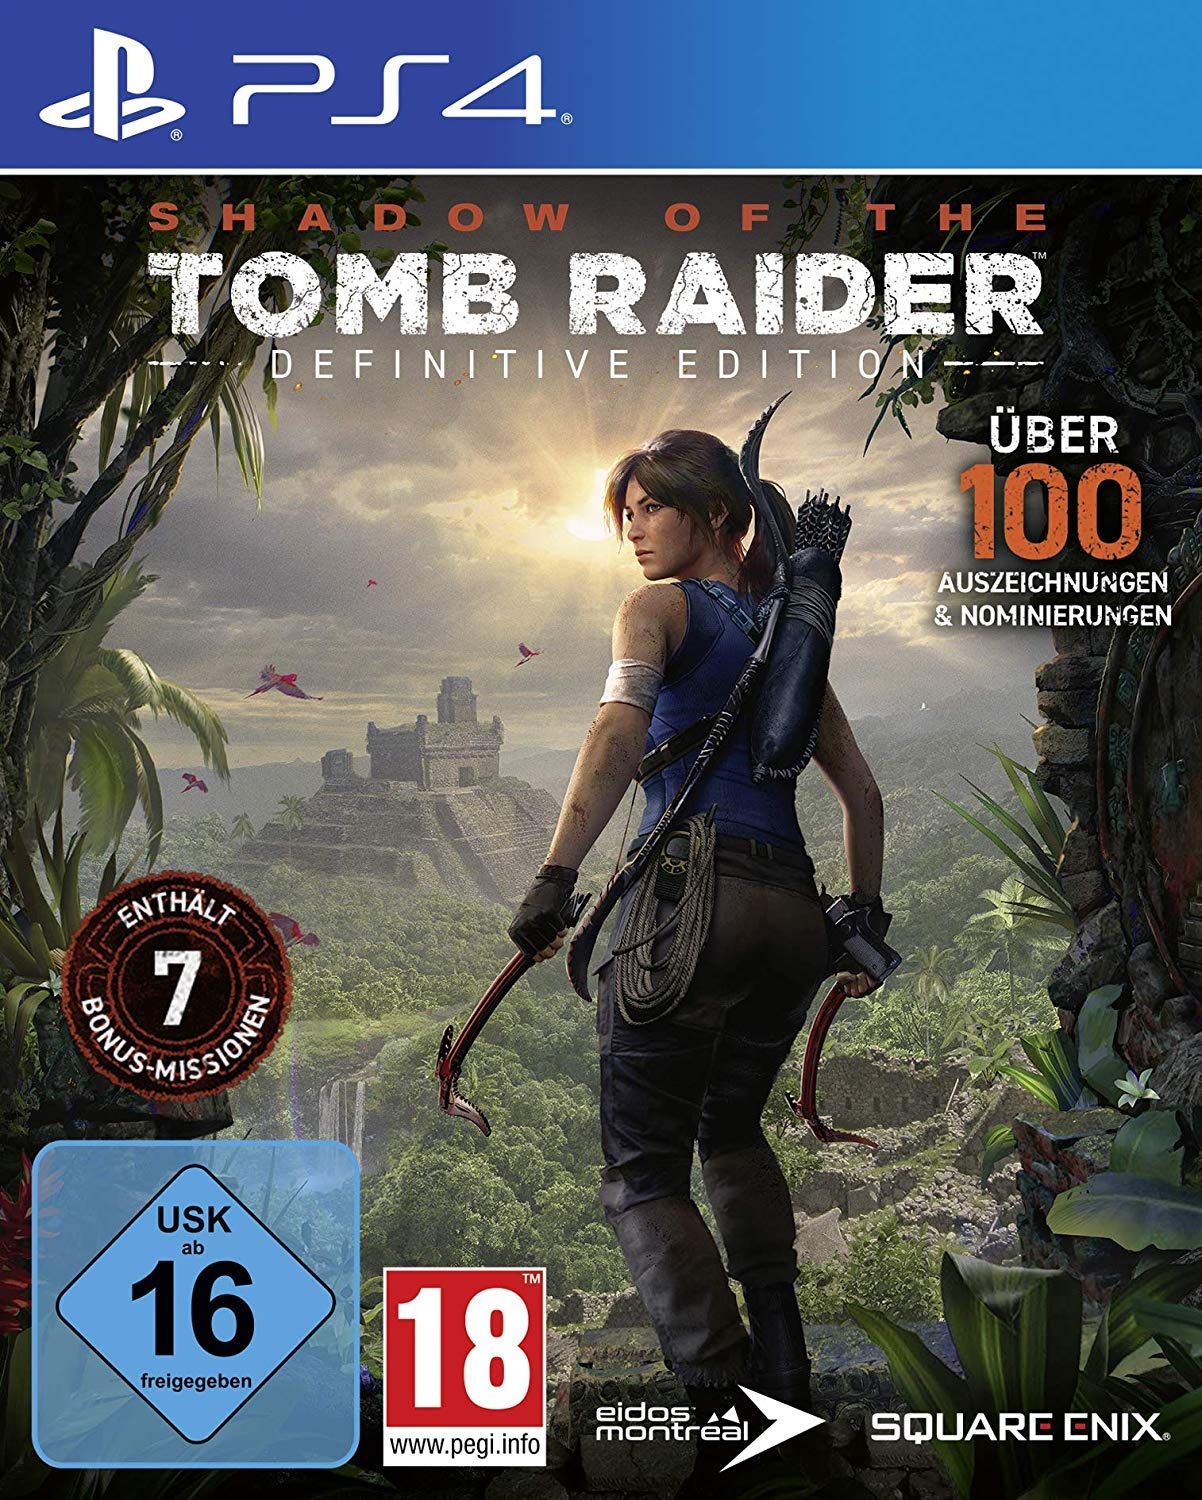 Square Enix Enix of the Tomb Raider Definitive Edition (PS4), 1037515